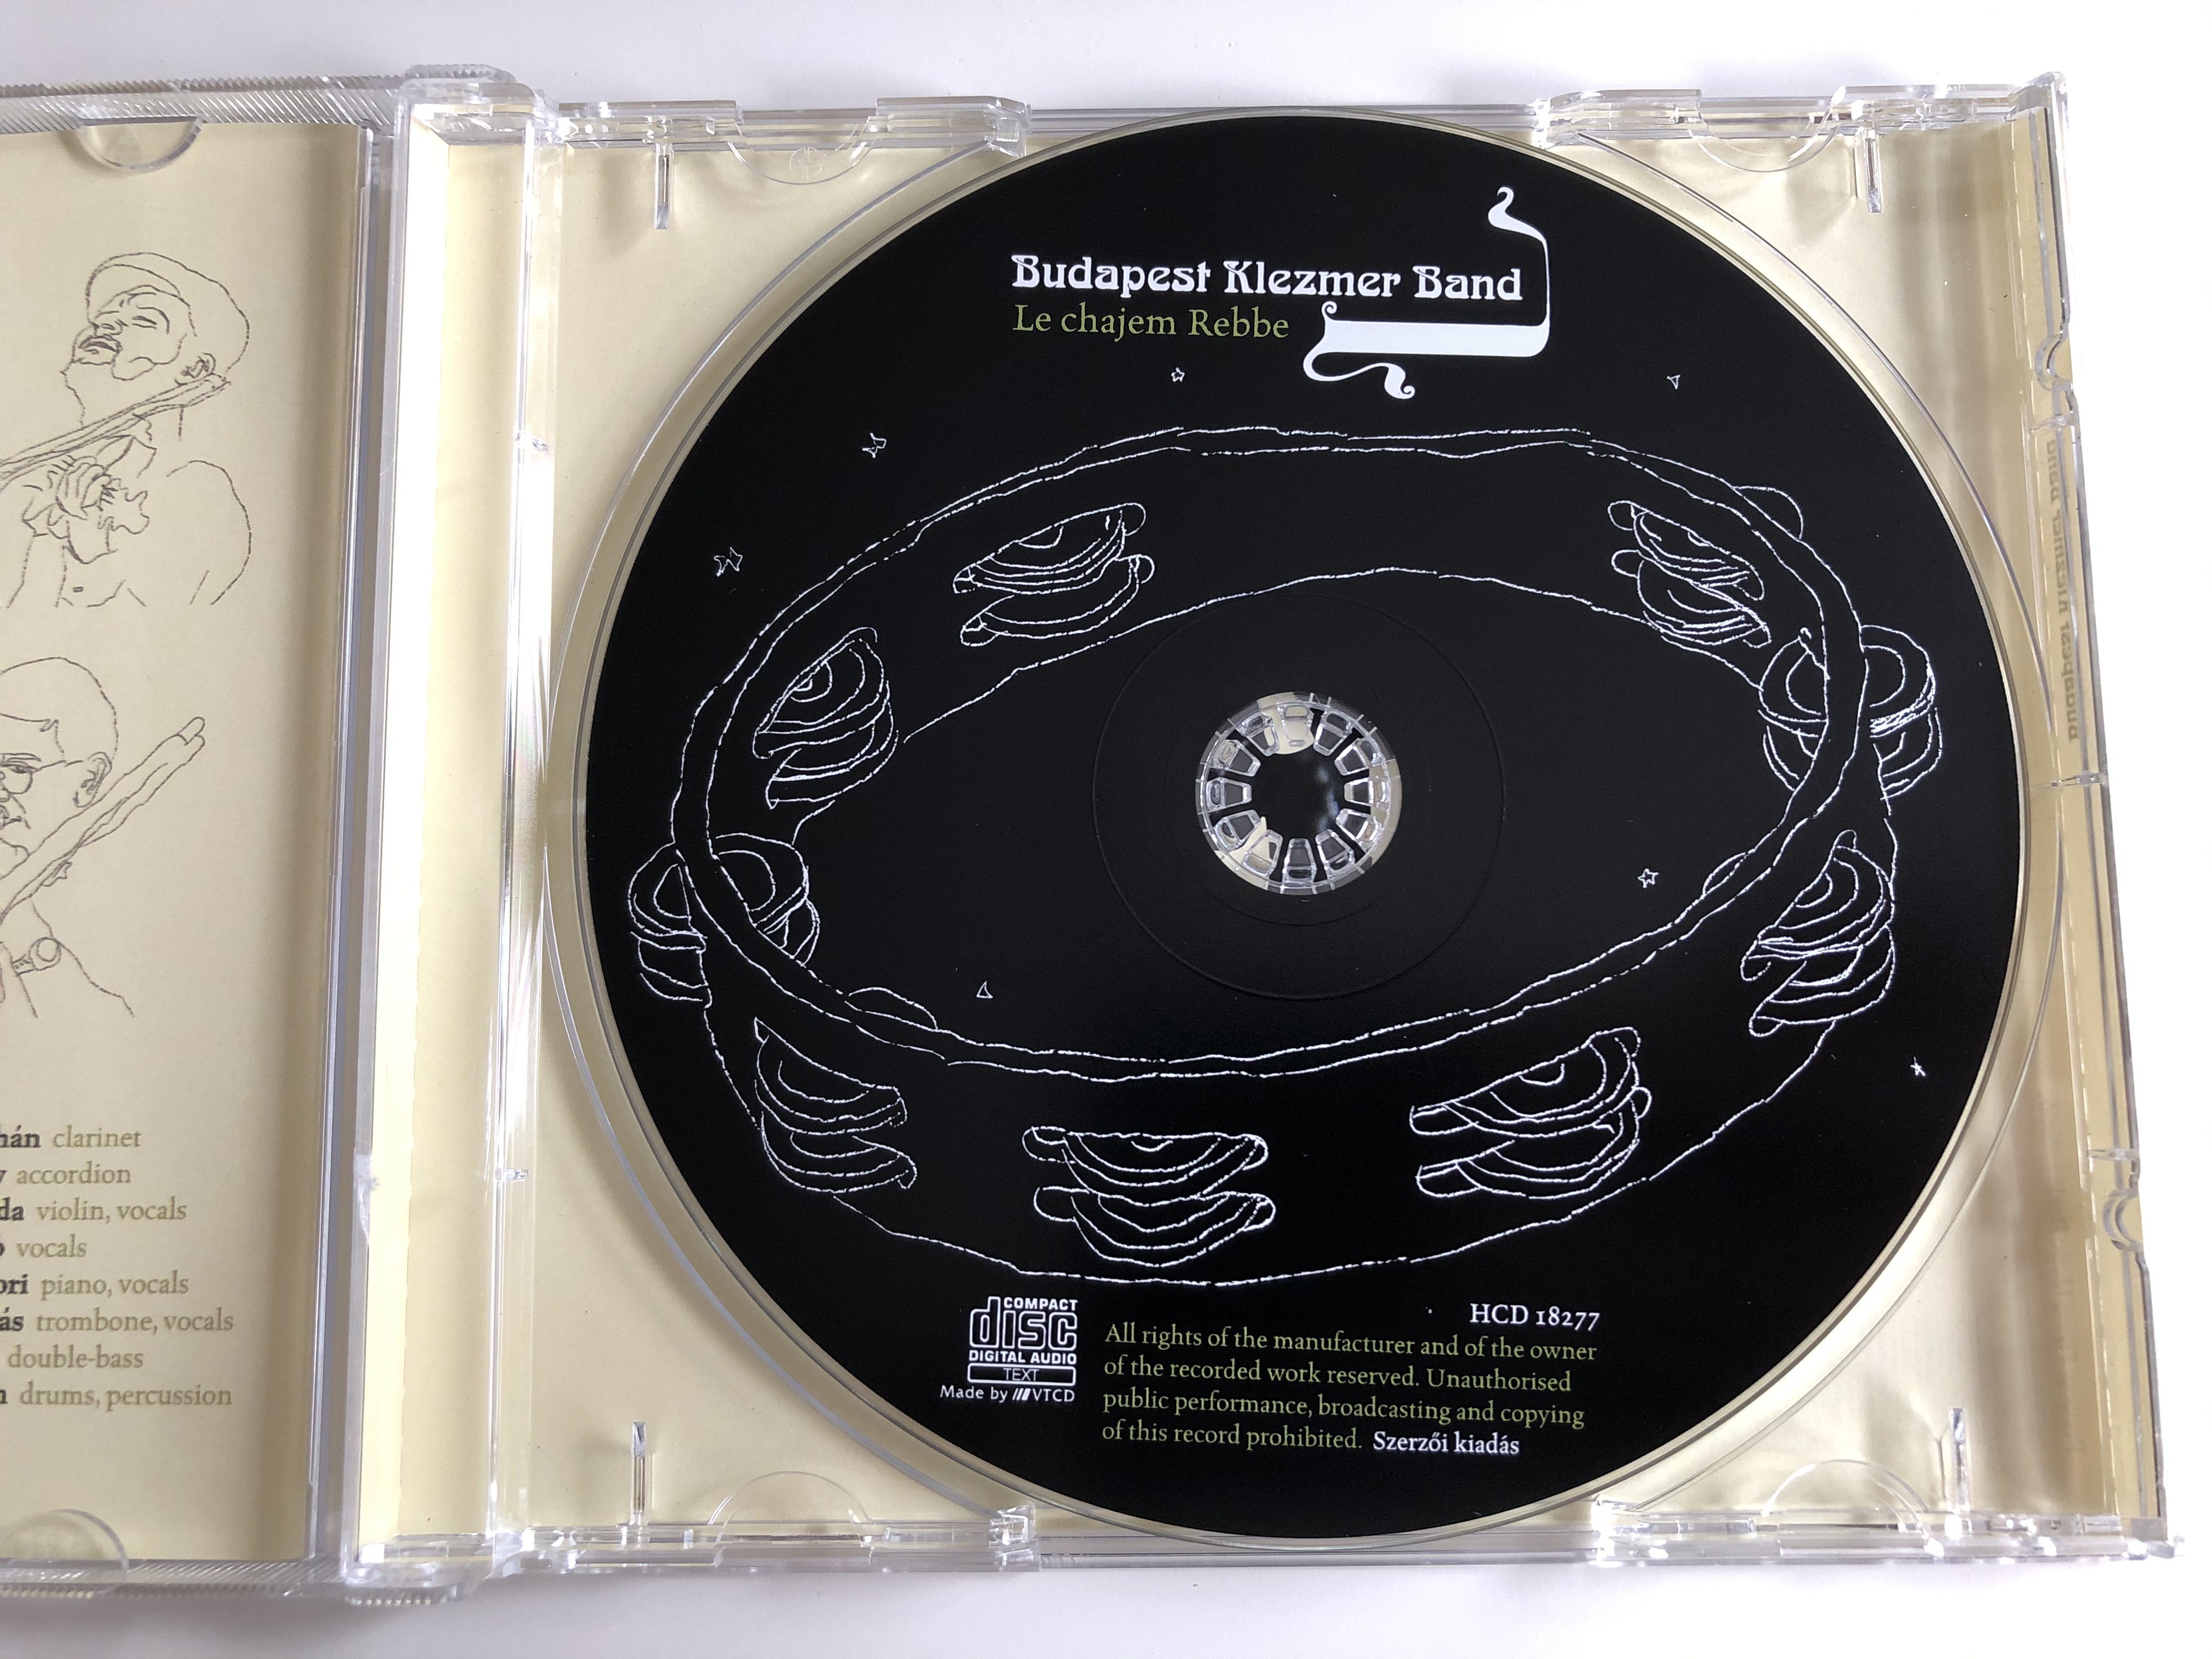 budapest-klezmer-band-le-chajem-rebbe-hungaroton-classic-audio-cd-hcd-18277-3-.jpg